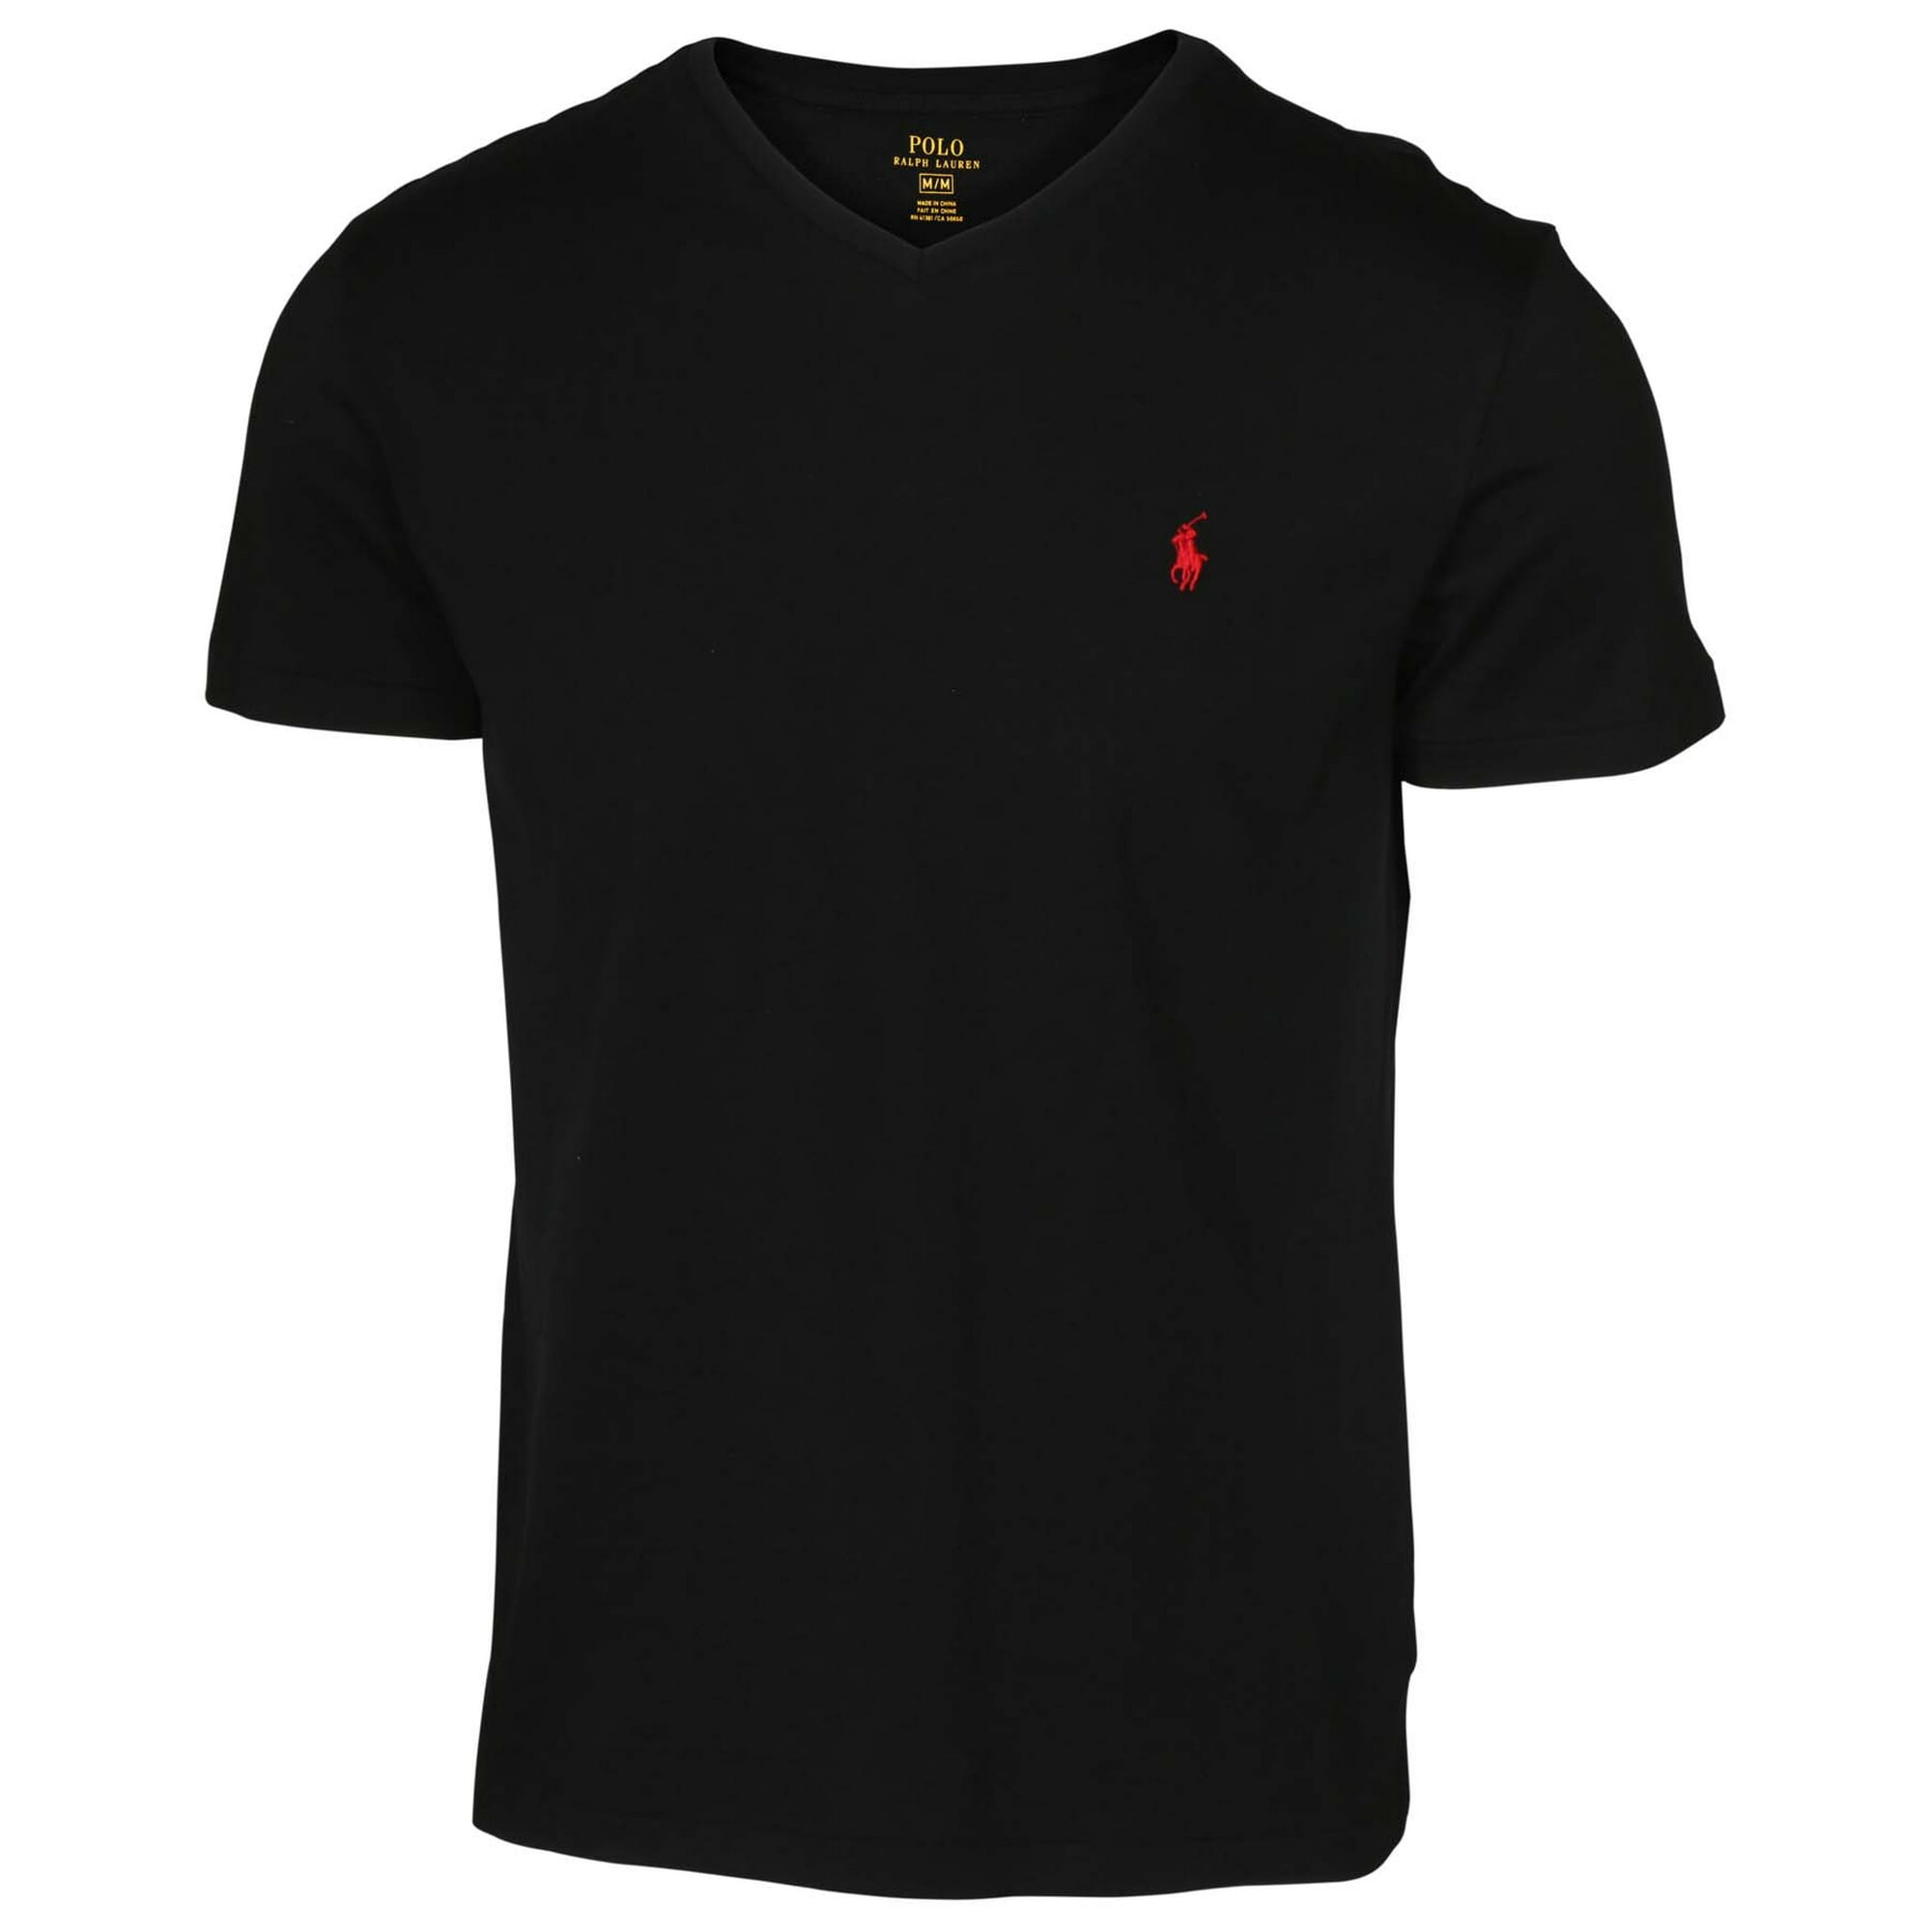 polo ralph lauren men's fit v-neck t-shirt (small, rl black) - Walmart.com